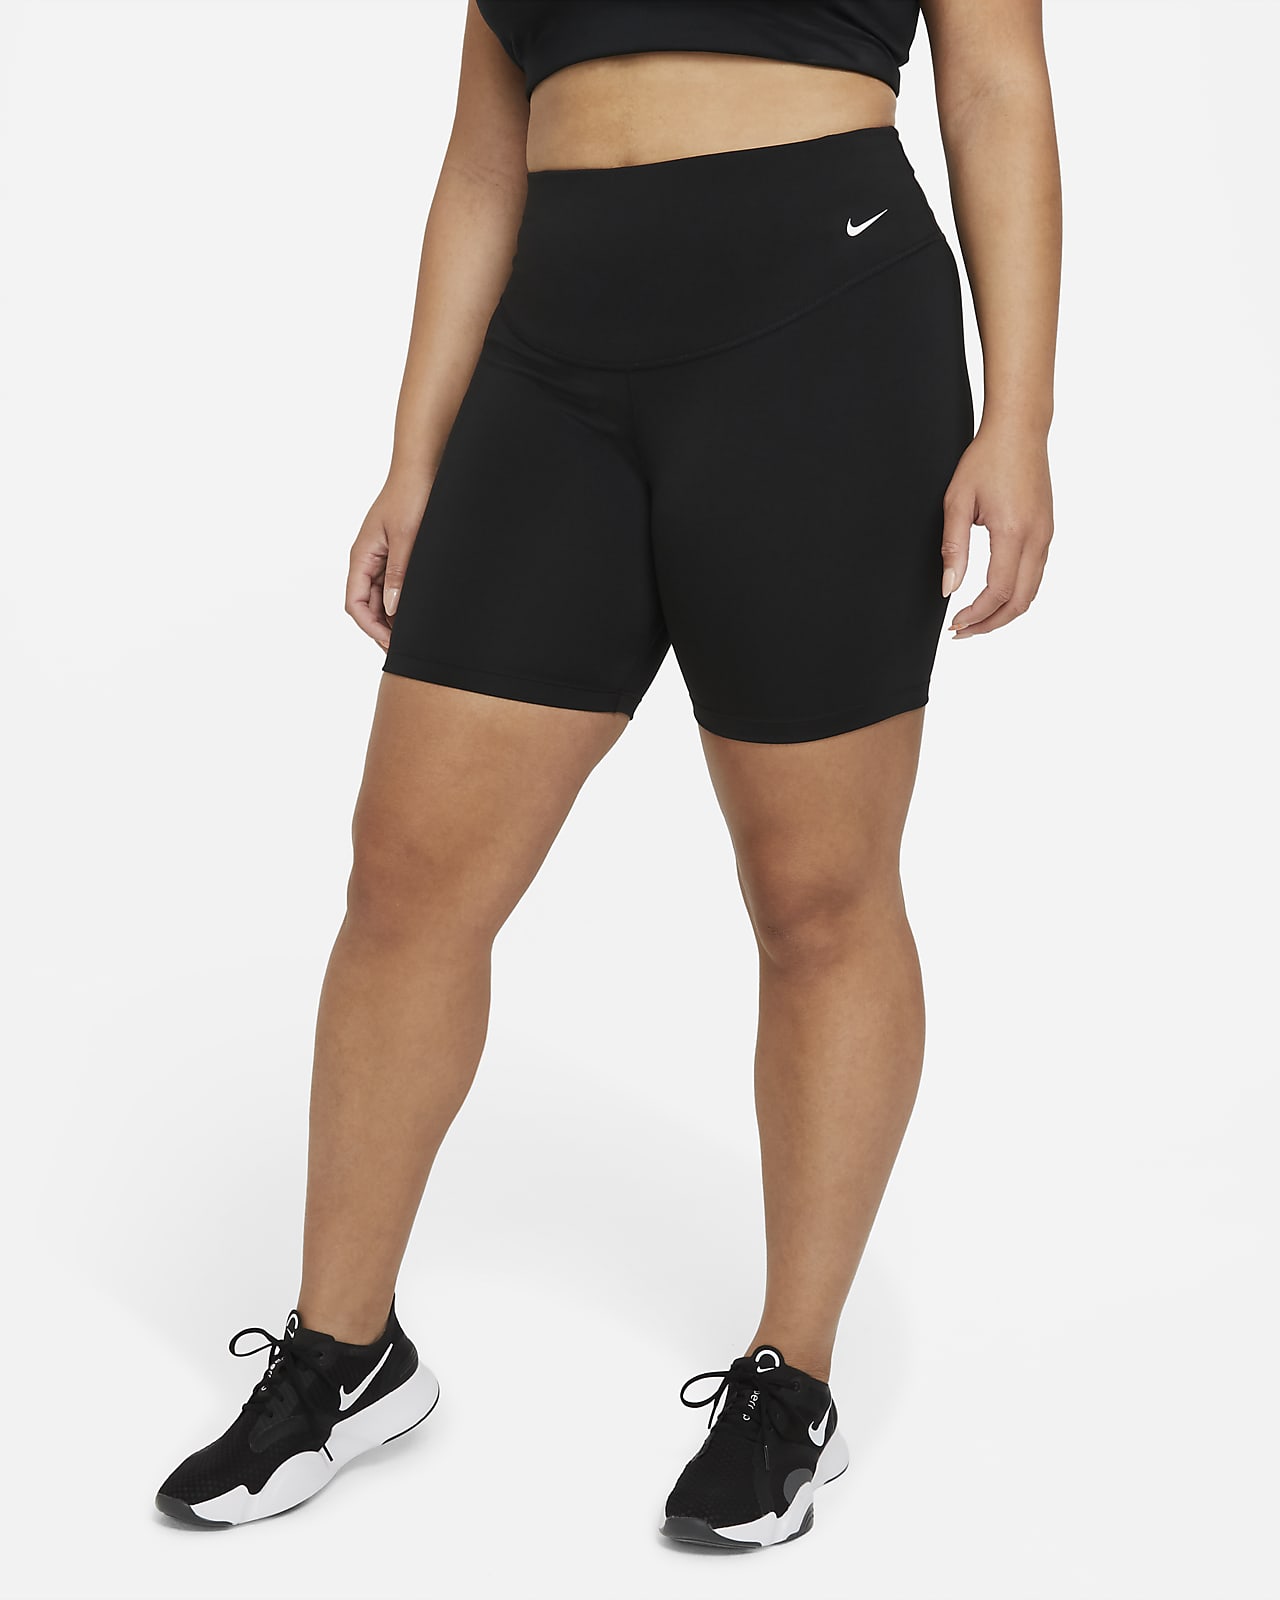 Nike One-cykelshorts mellemhøj talje (18 cm) kvinder (Plus size). DK